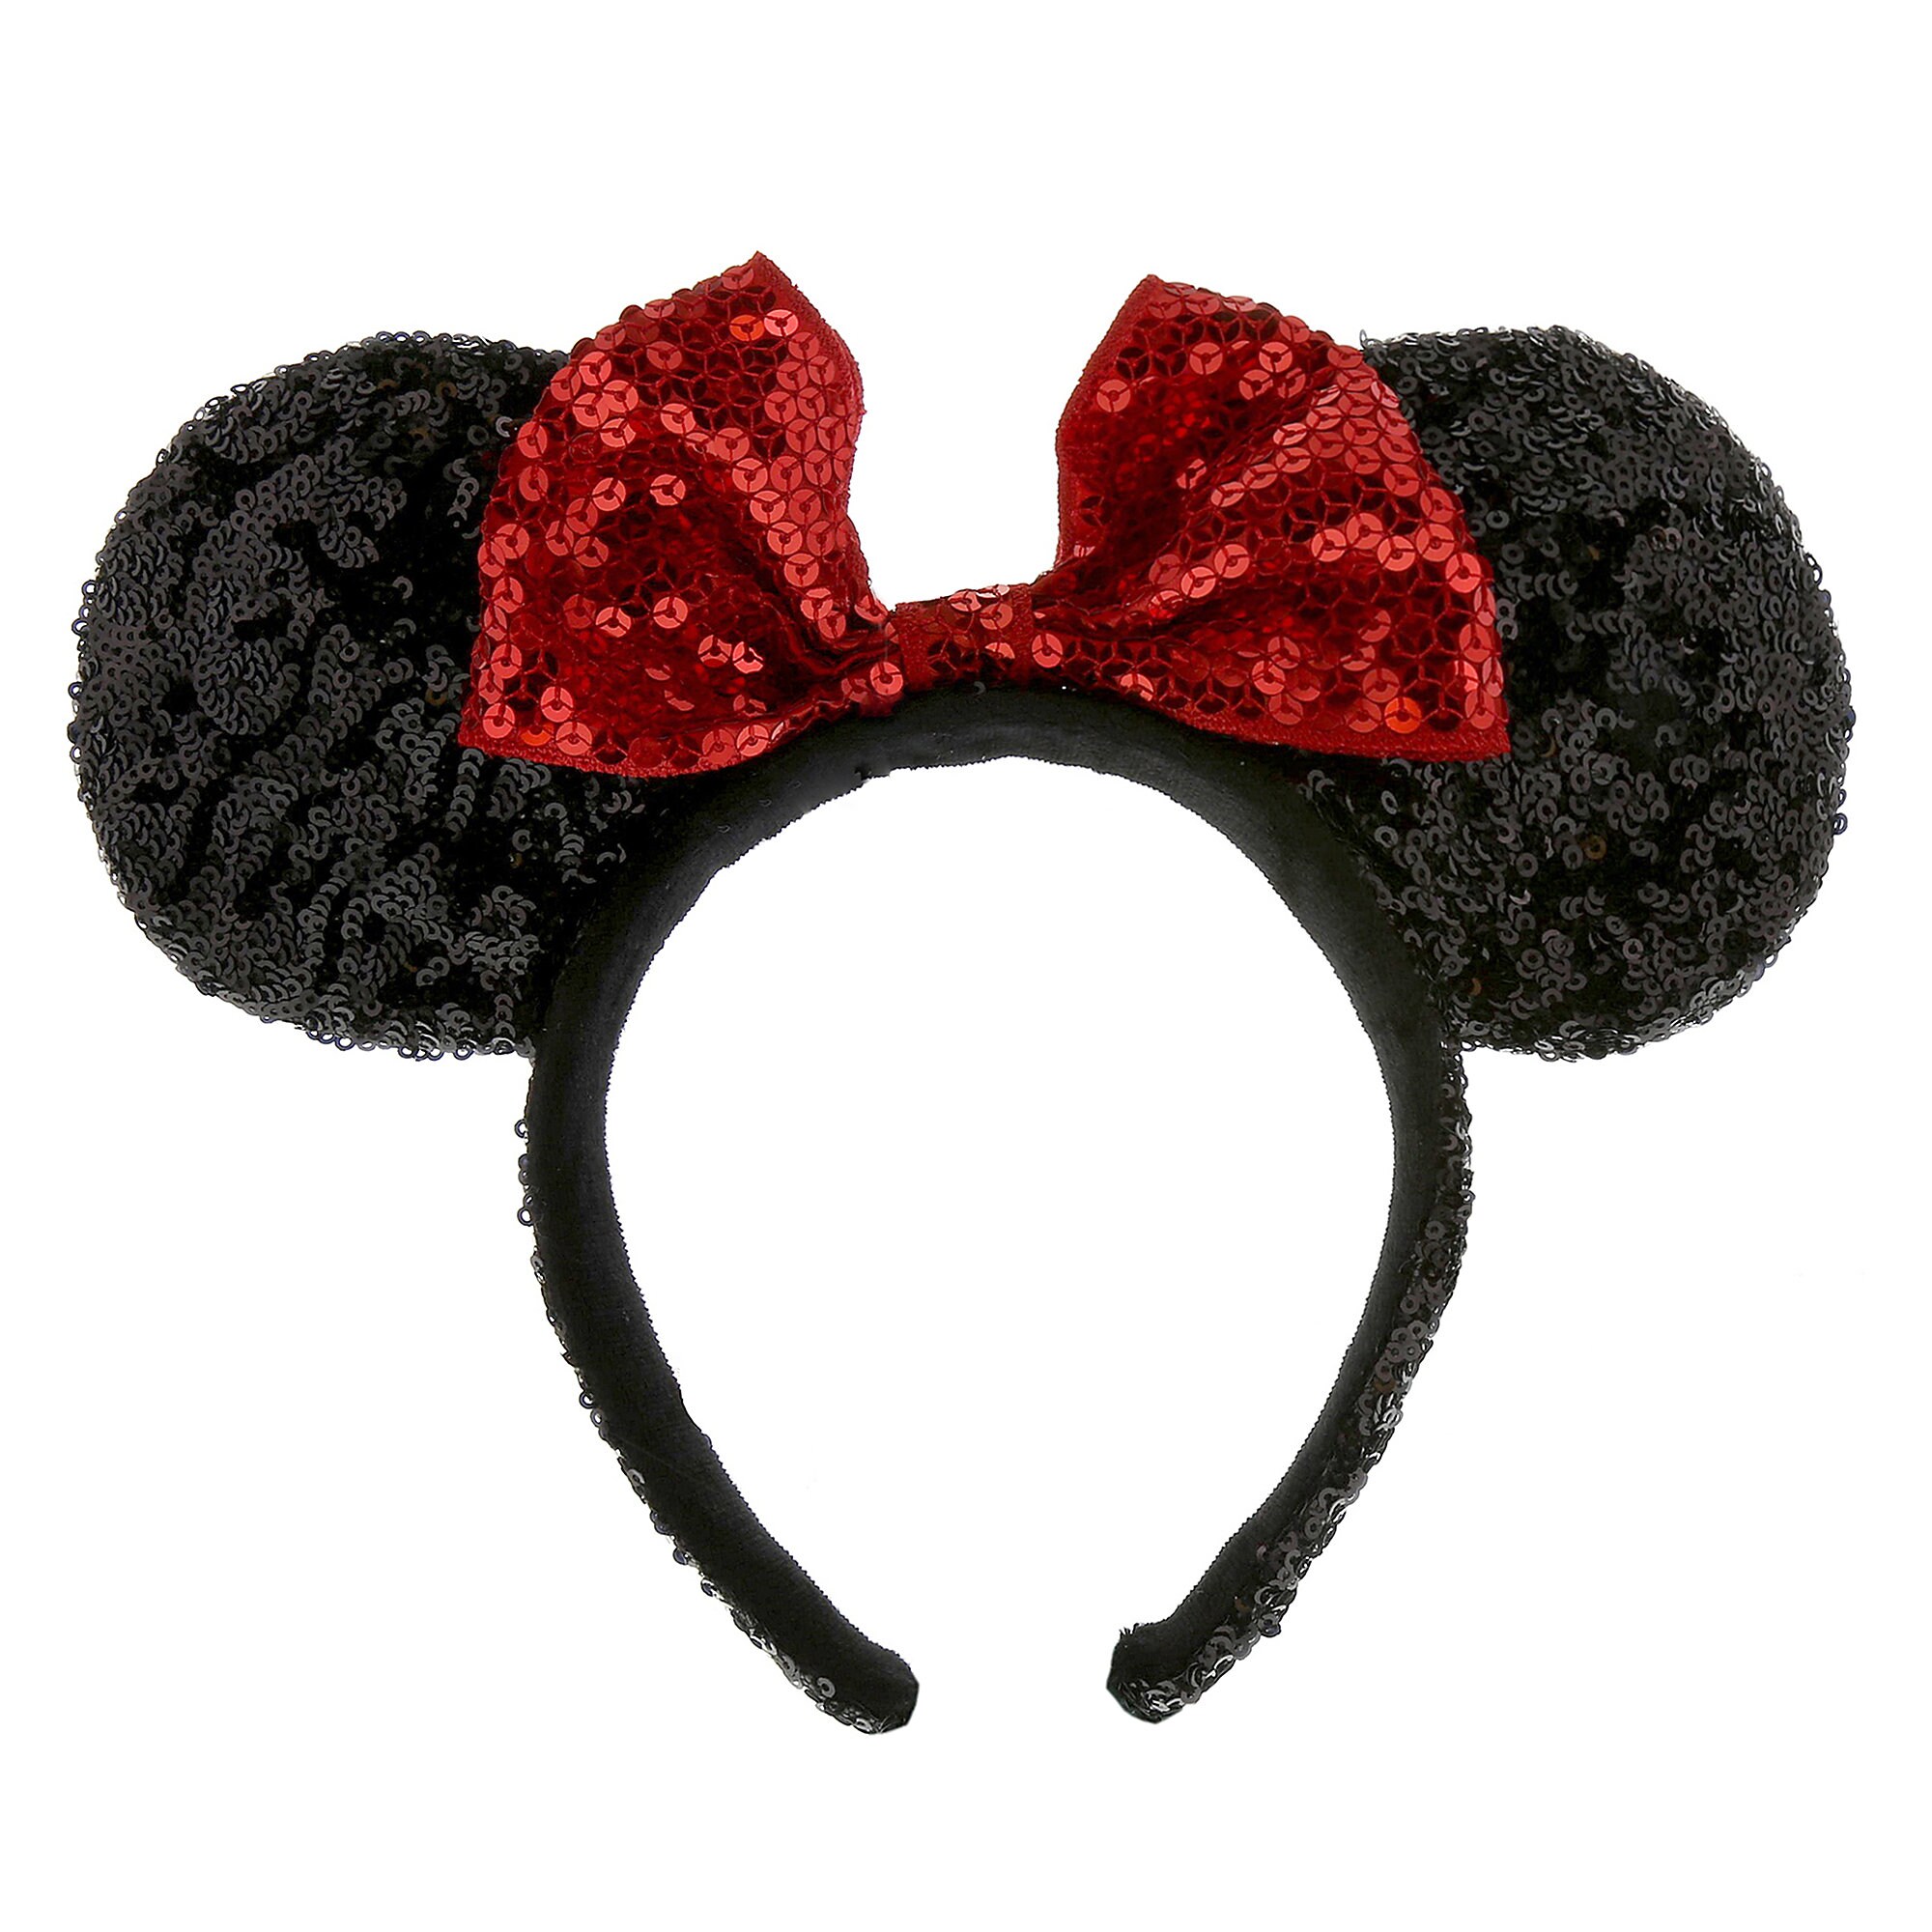 Minnie Mouse Ears Headband - Sequined